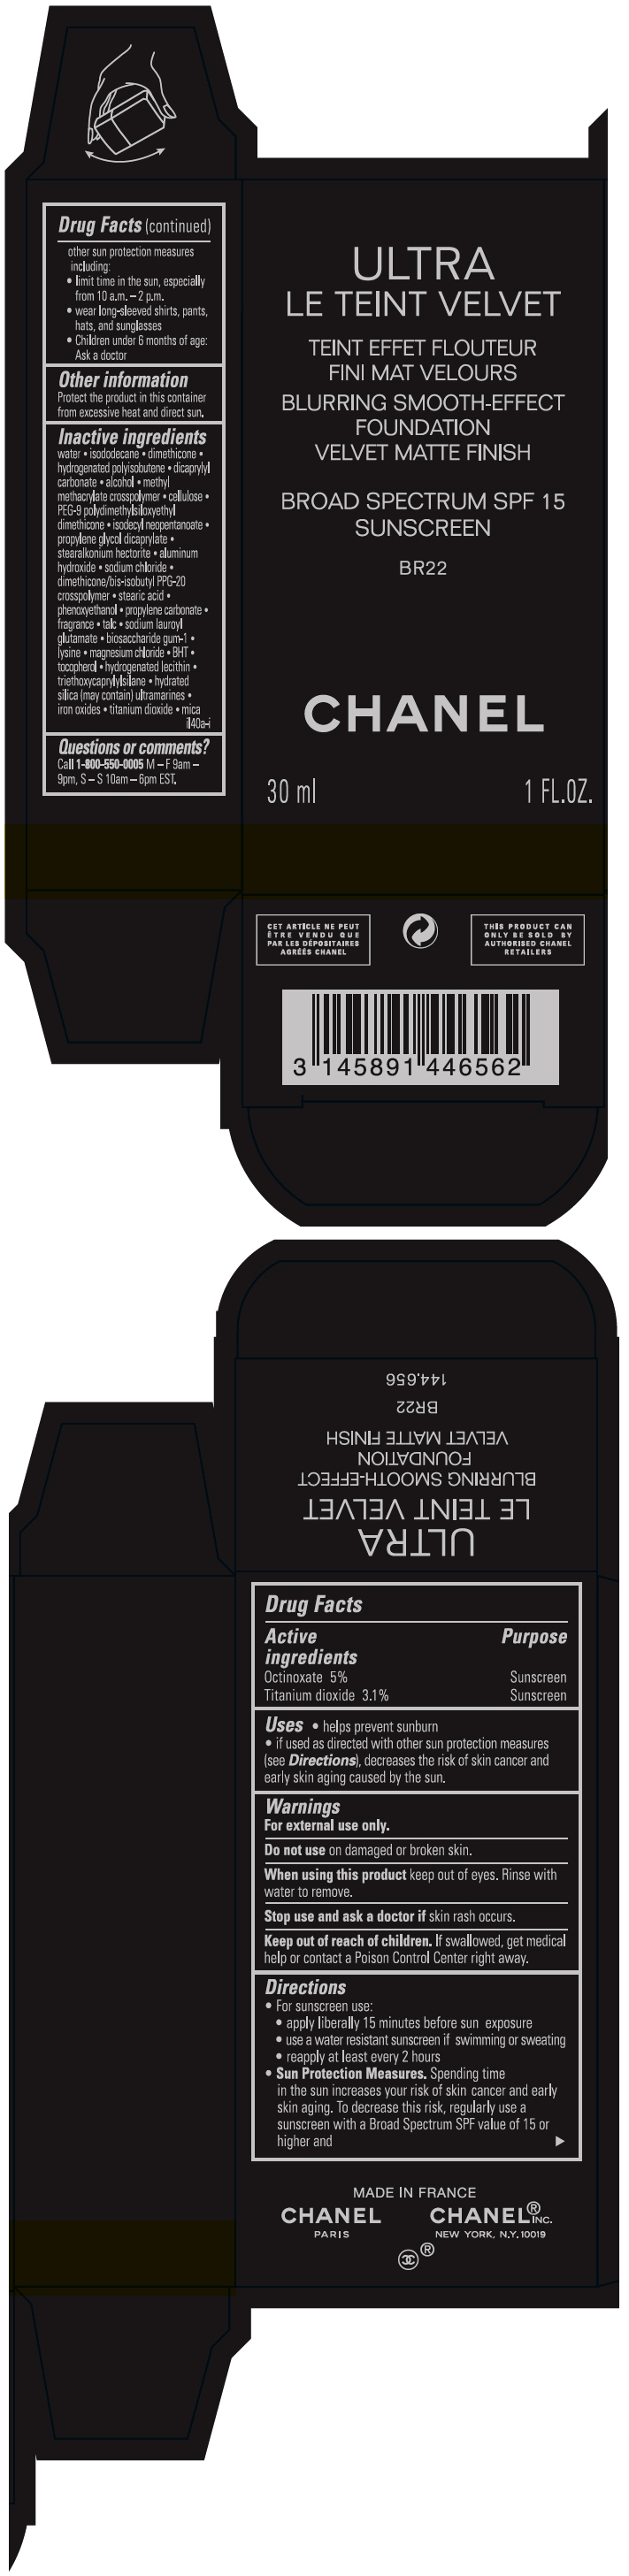 PRINCIPAL DISPLAY PANEL - 30 ml Bottle Carton - BR22